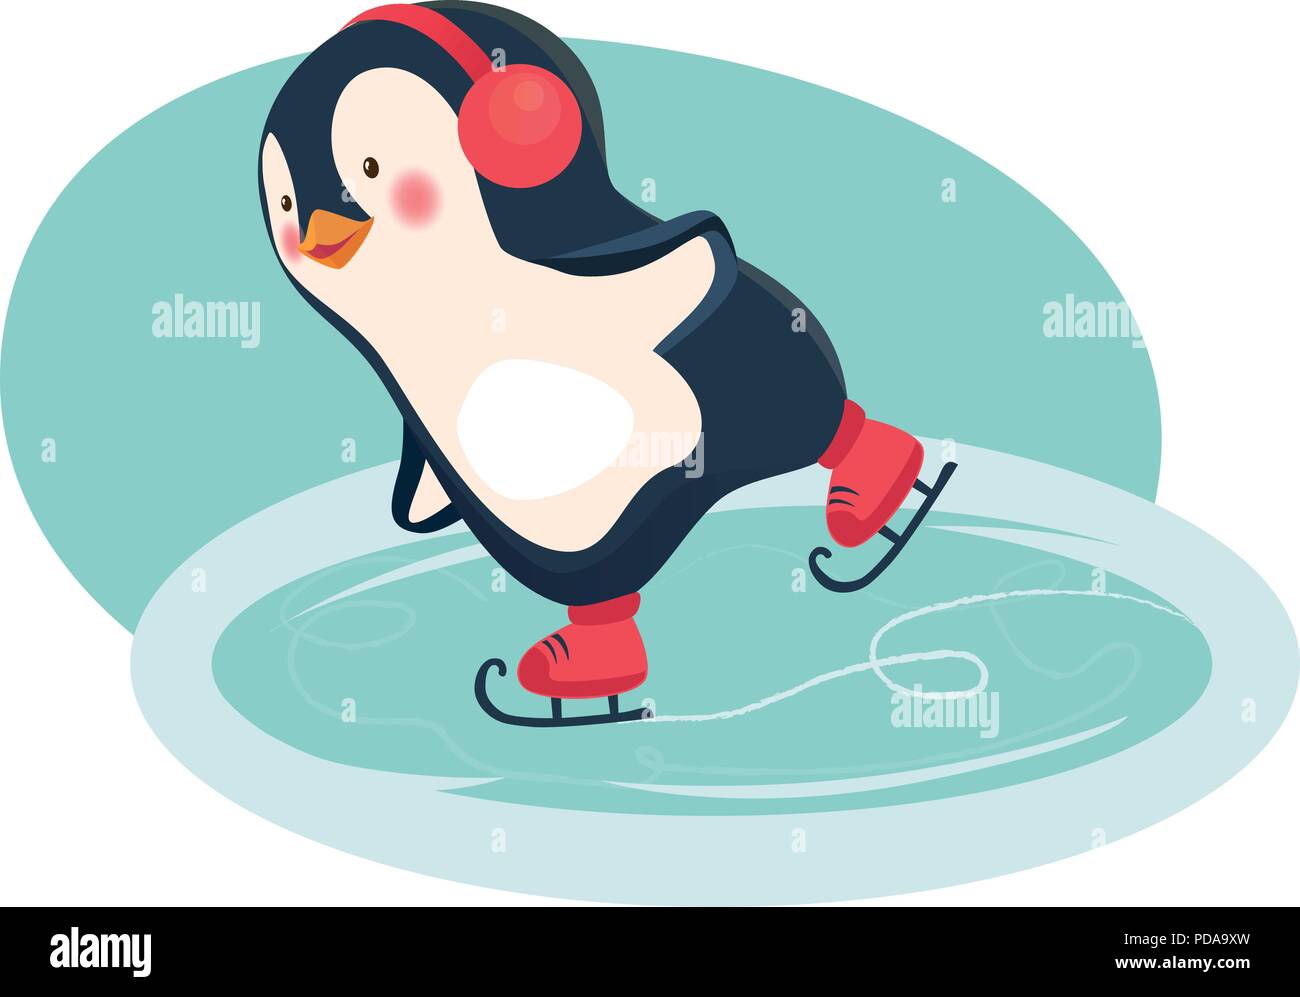 Penguin cartoon. Penguin ice skates on ice skating rink in the winter vector illustration. Activity in winter. Stock Vector